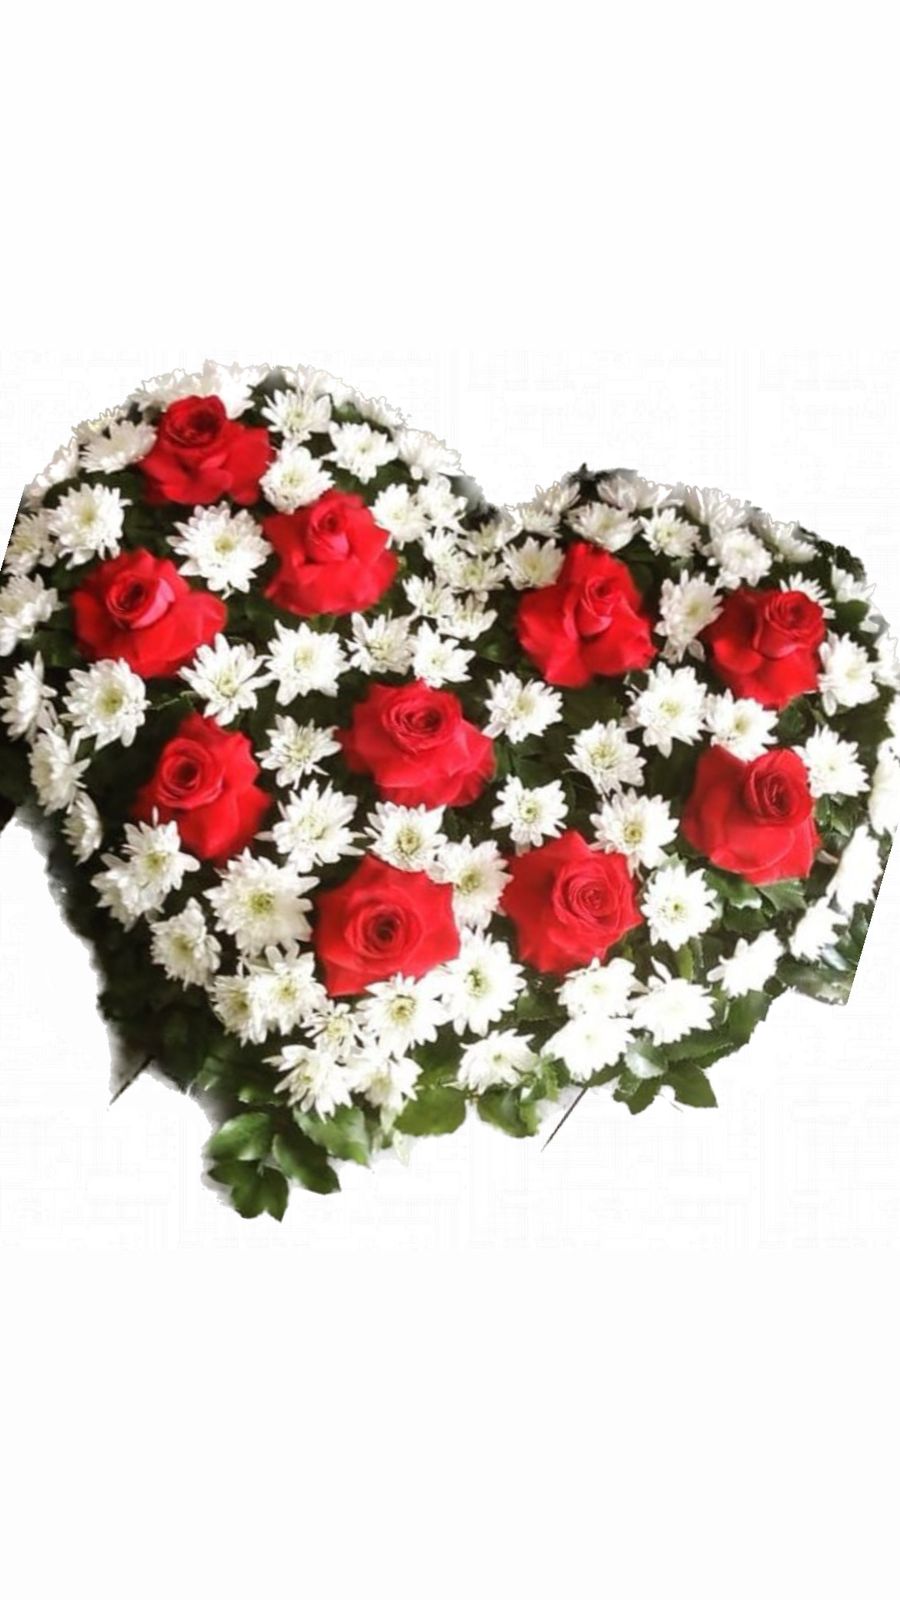 Corona corazón rosas rojas flores blancas - FLORERIA ILUSION PUCON